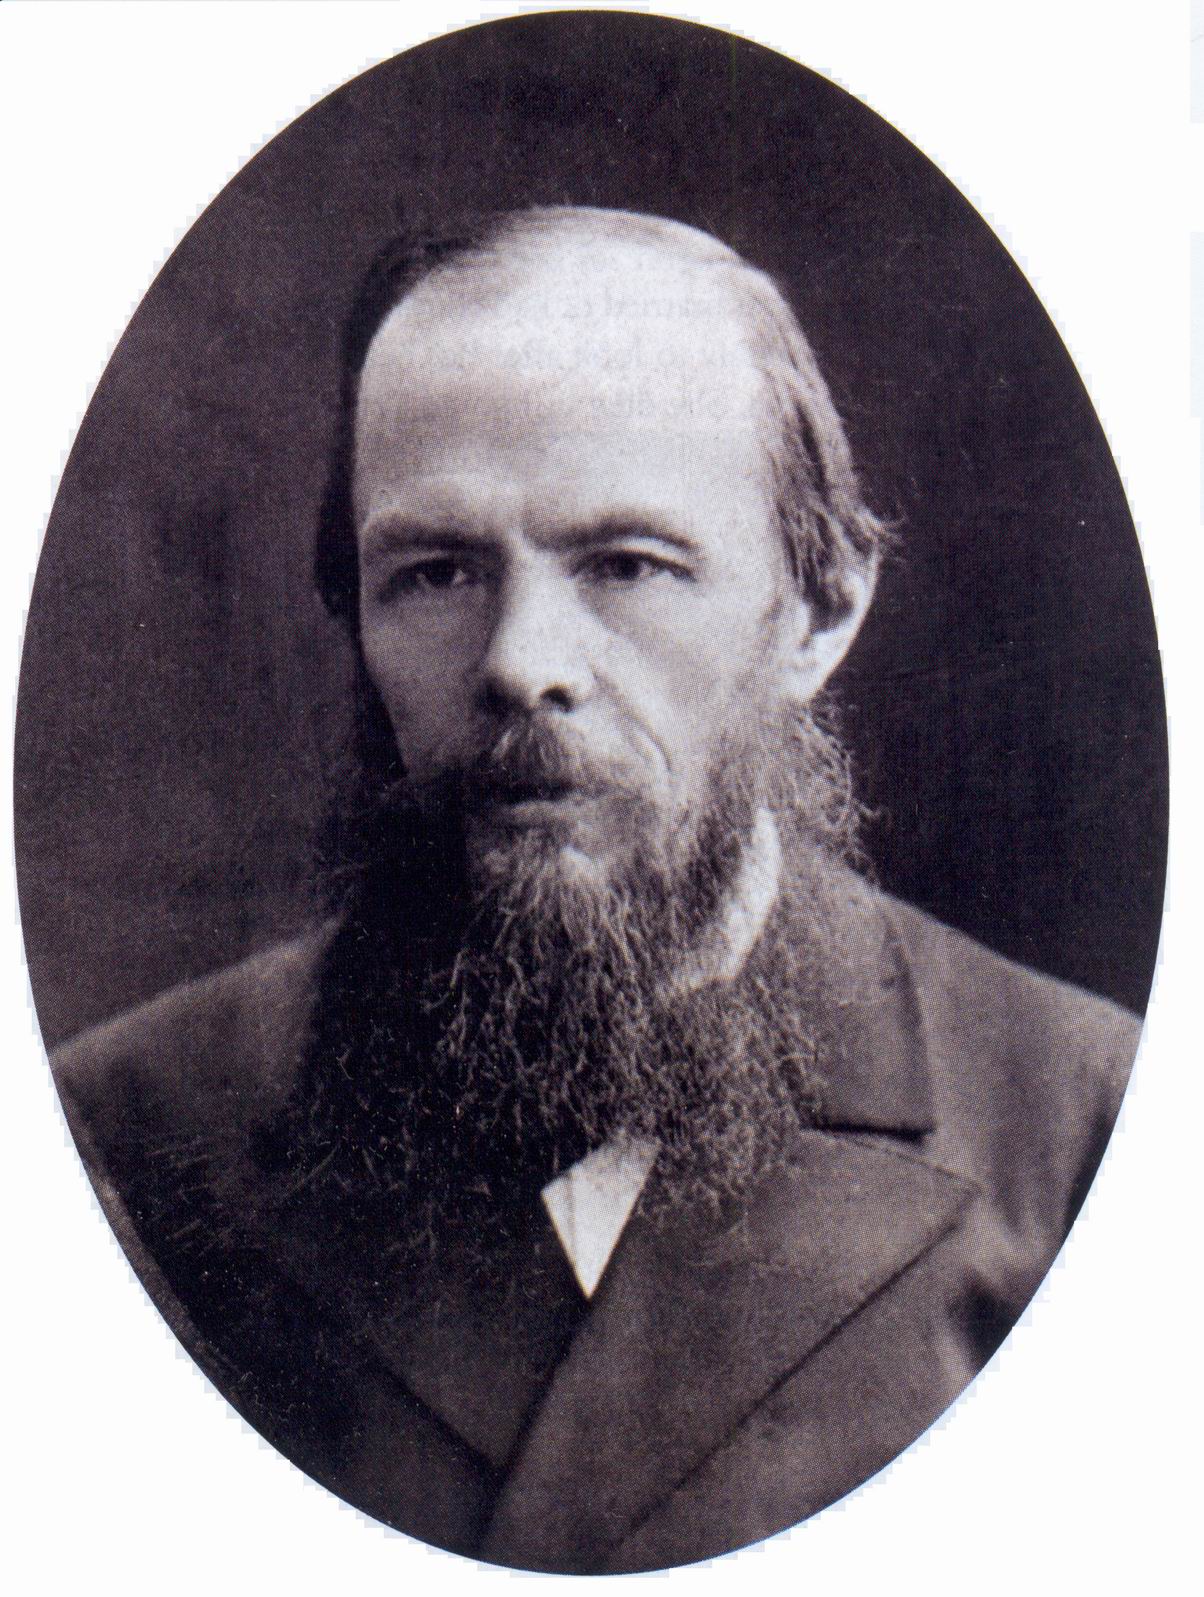 Реферат: Crime And Punishment By Feodor Dostoevsky Essay